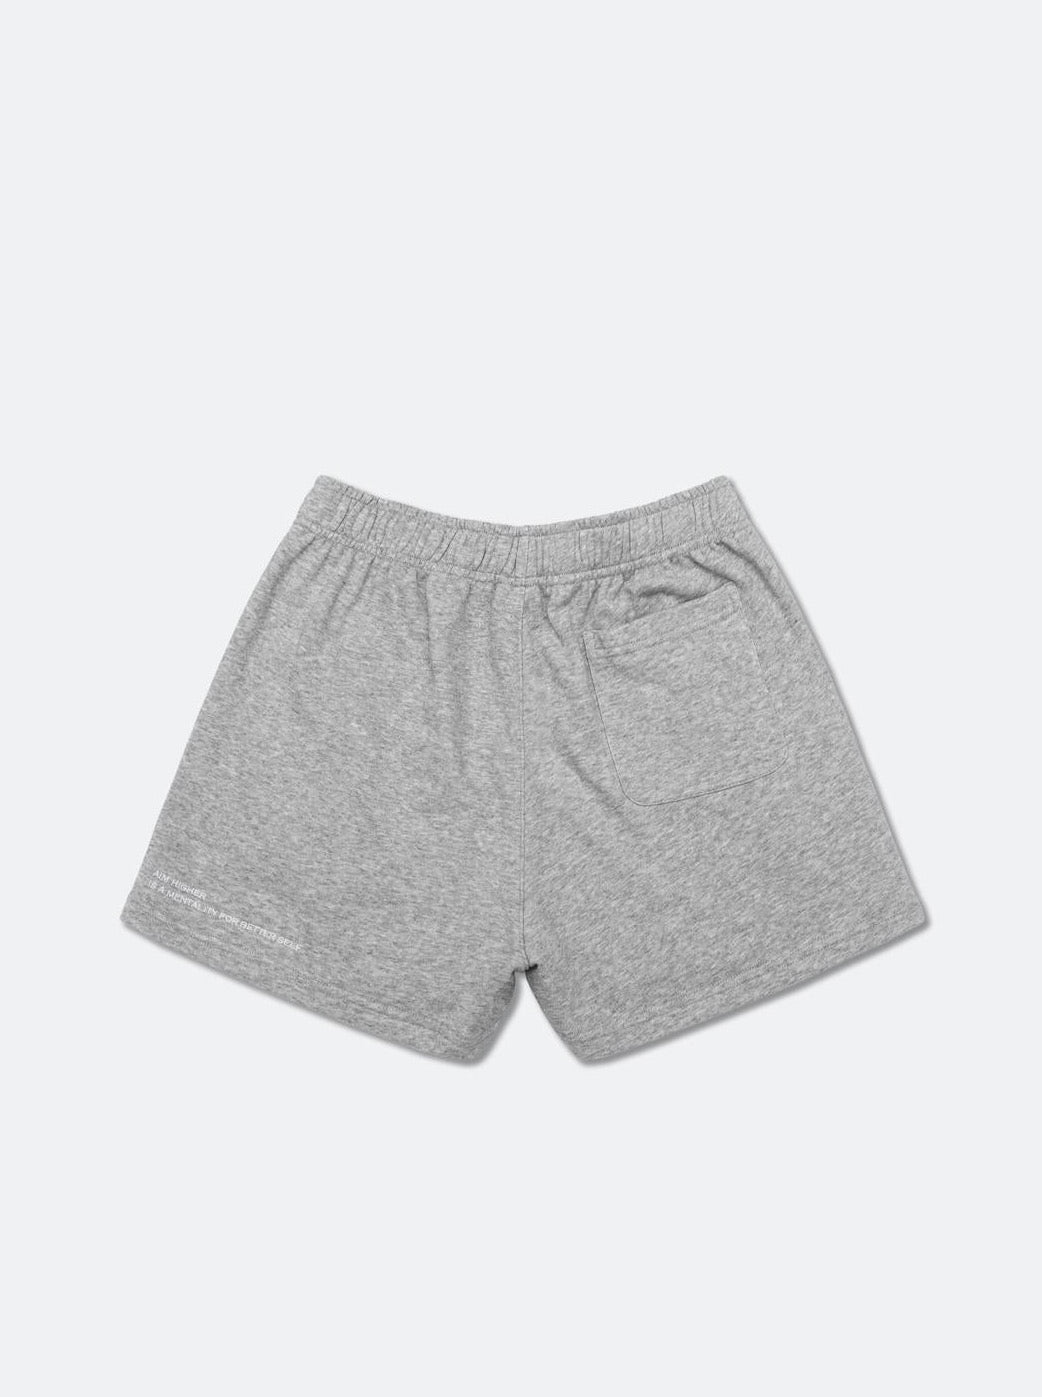 ahc sweat shorts